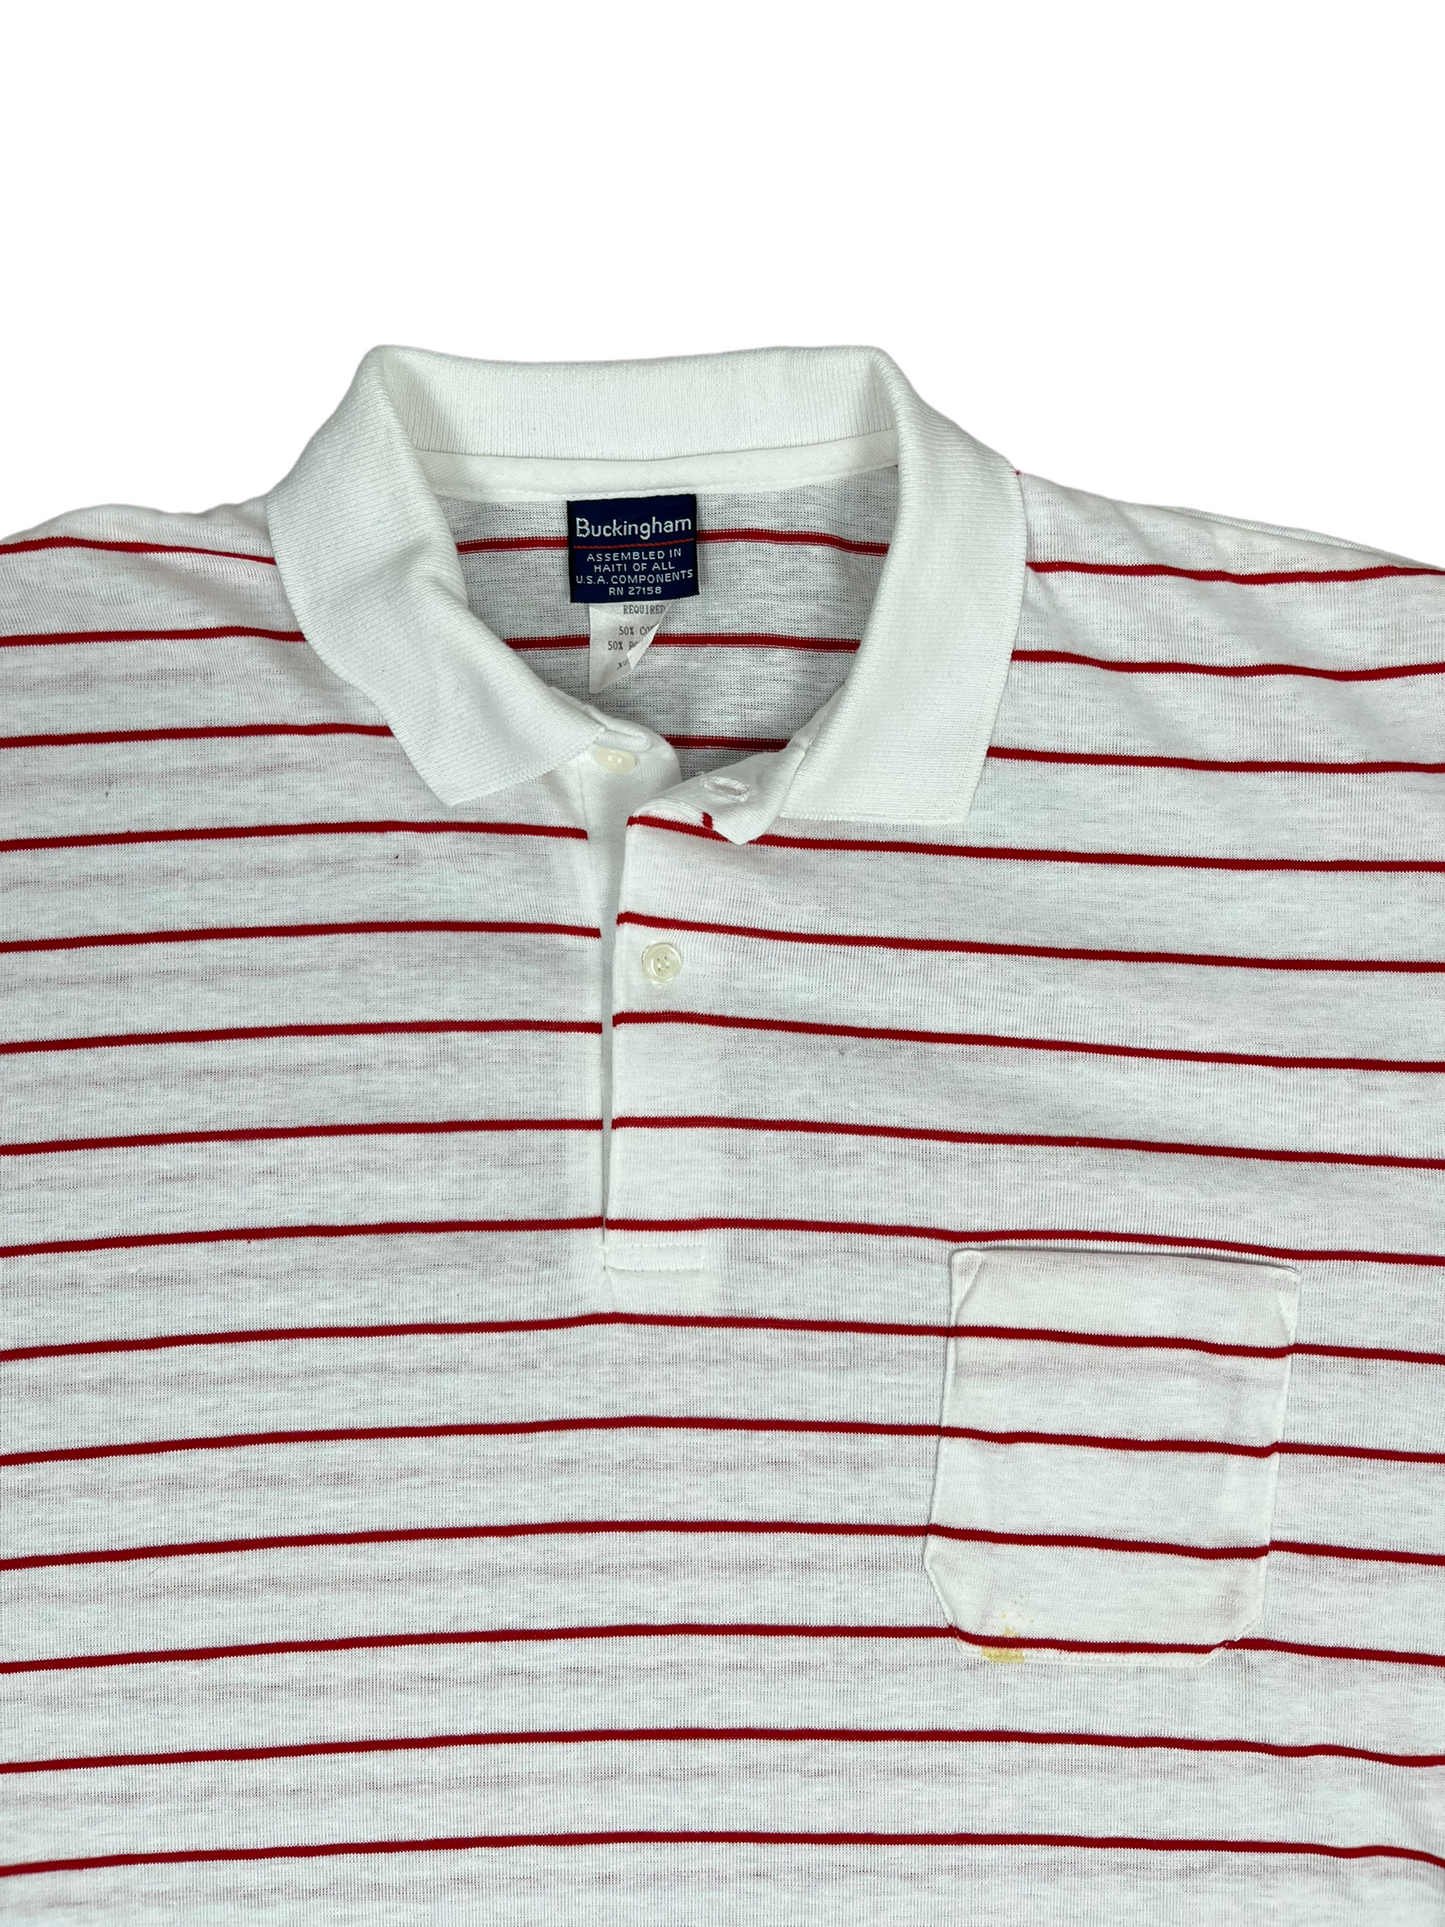 Vintage 80’s Buckingham Polo Shirt - XL